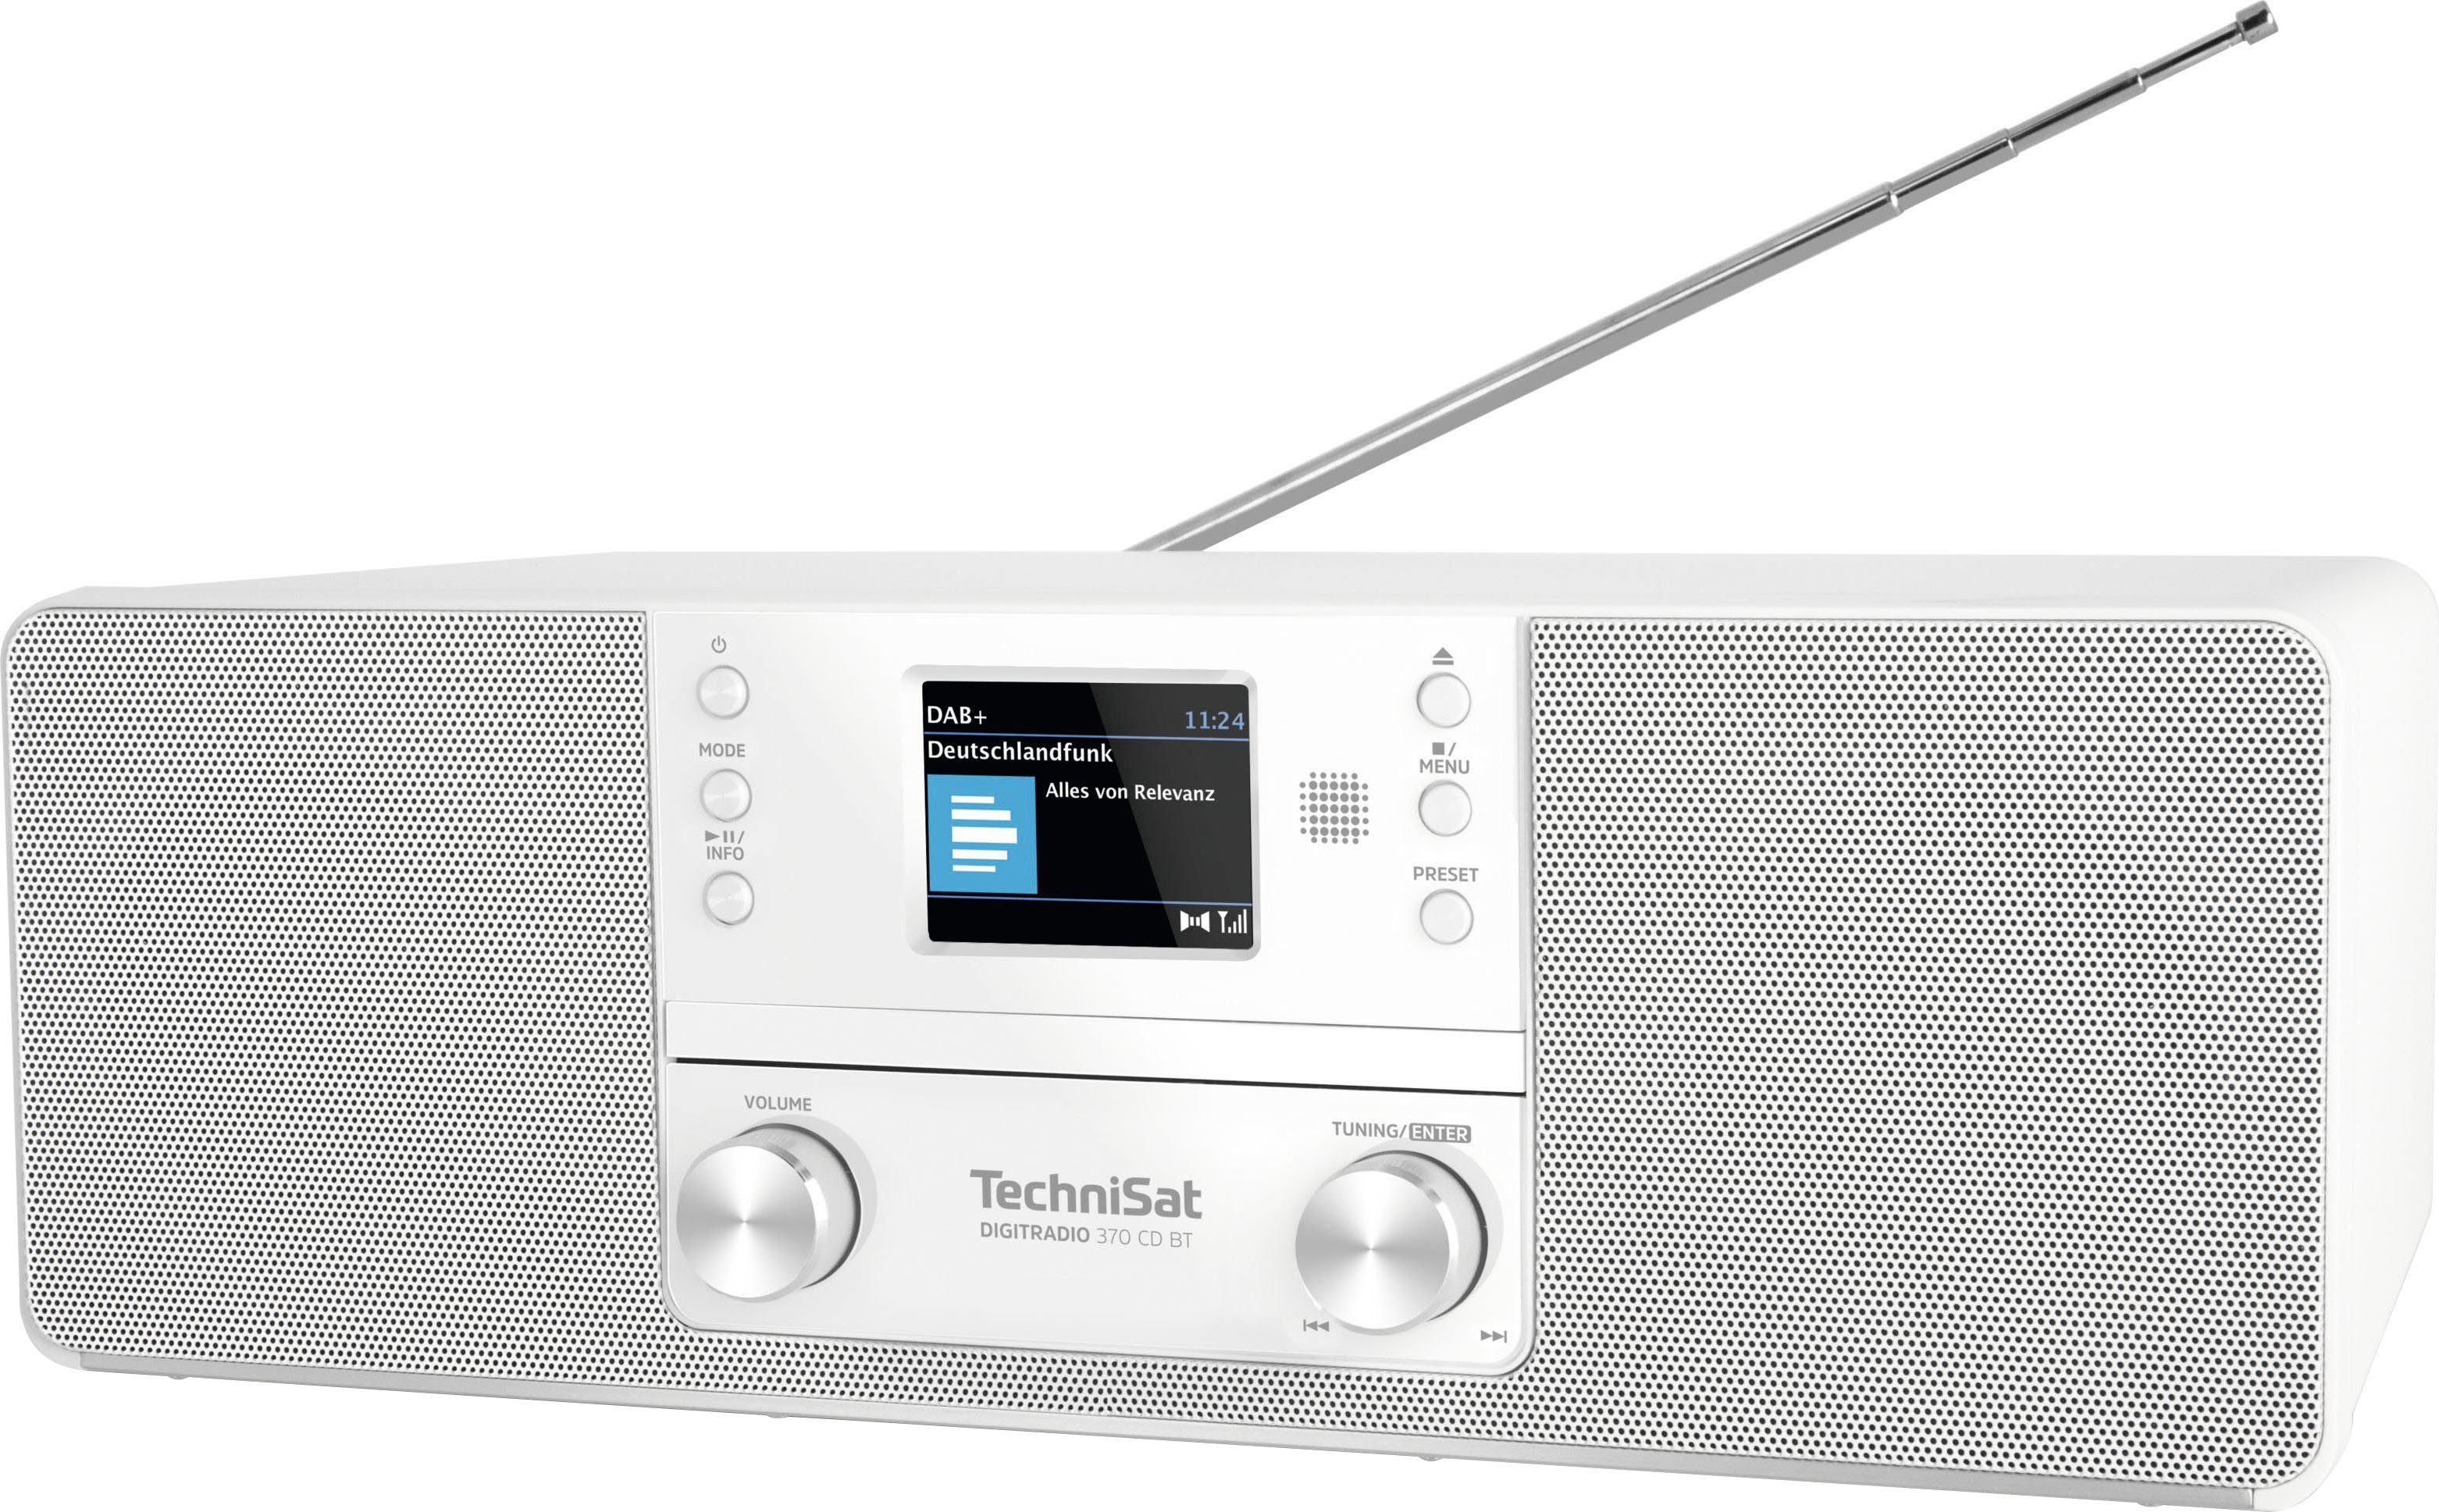 CD Digitalradio mit RDS, W) UKW BT 10 TechniSat (DAB) 370 (Digitalradio (DAB), DIGITRADIO weiß